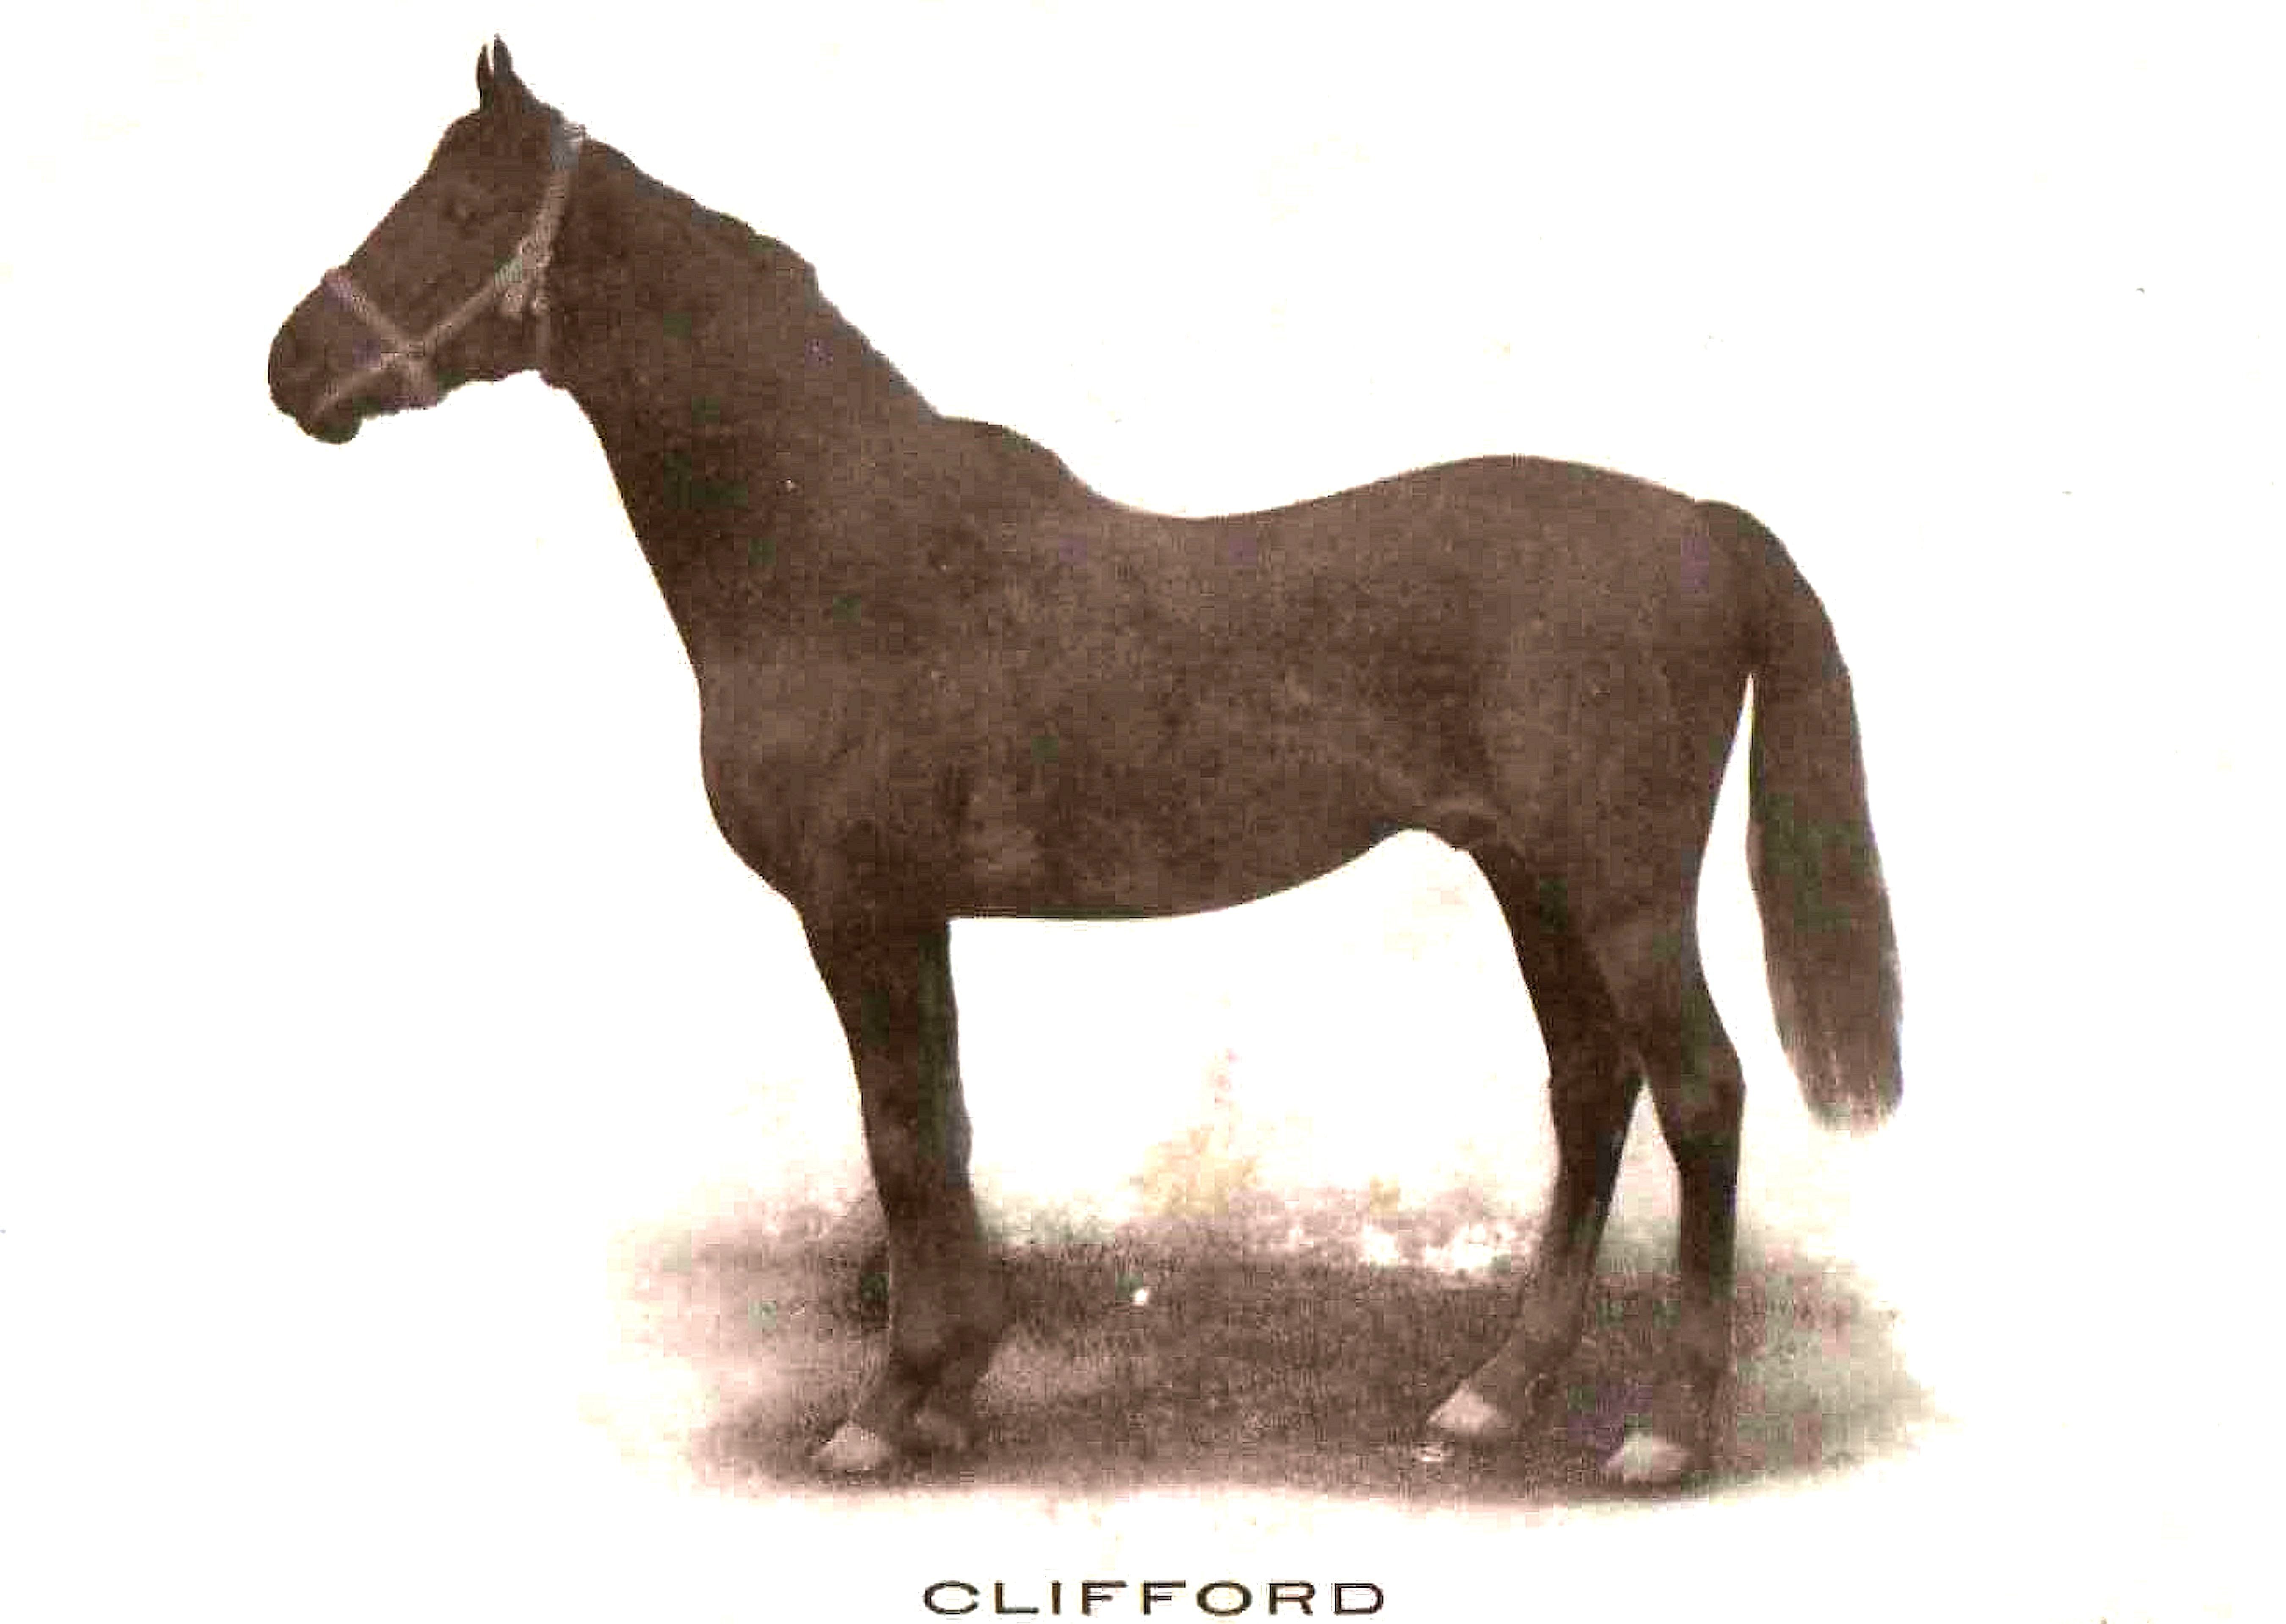 Clifford at Hurricana Farm (Courtesy of Friends of Sanford Stud Farm)